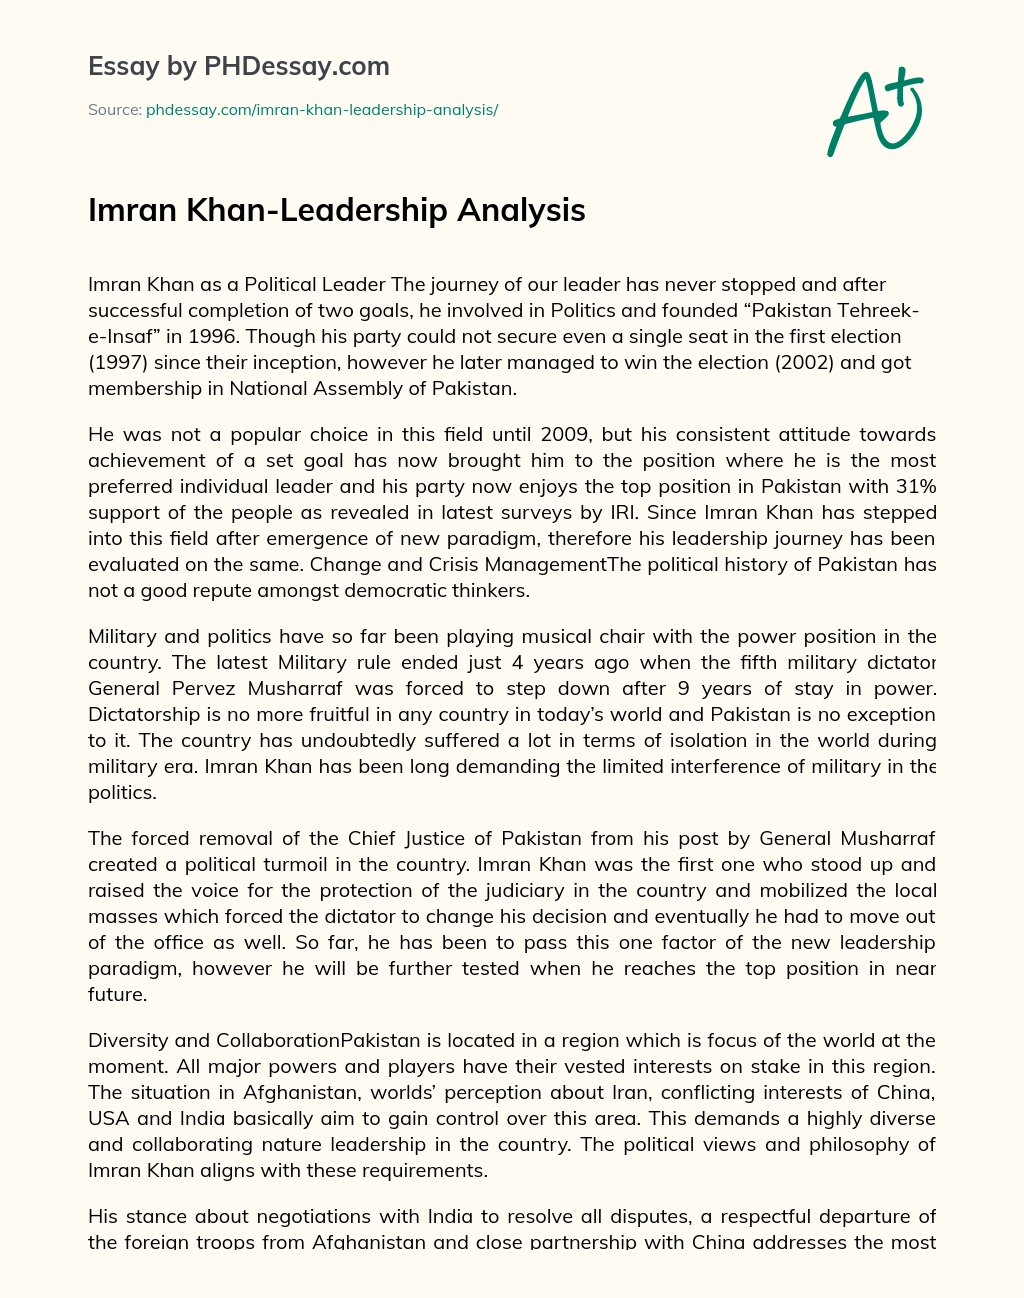 Imran Khan-Leadership Analysis essay